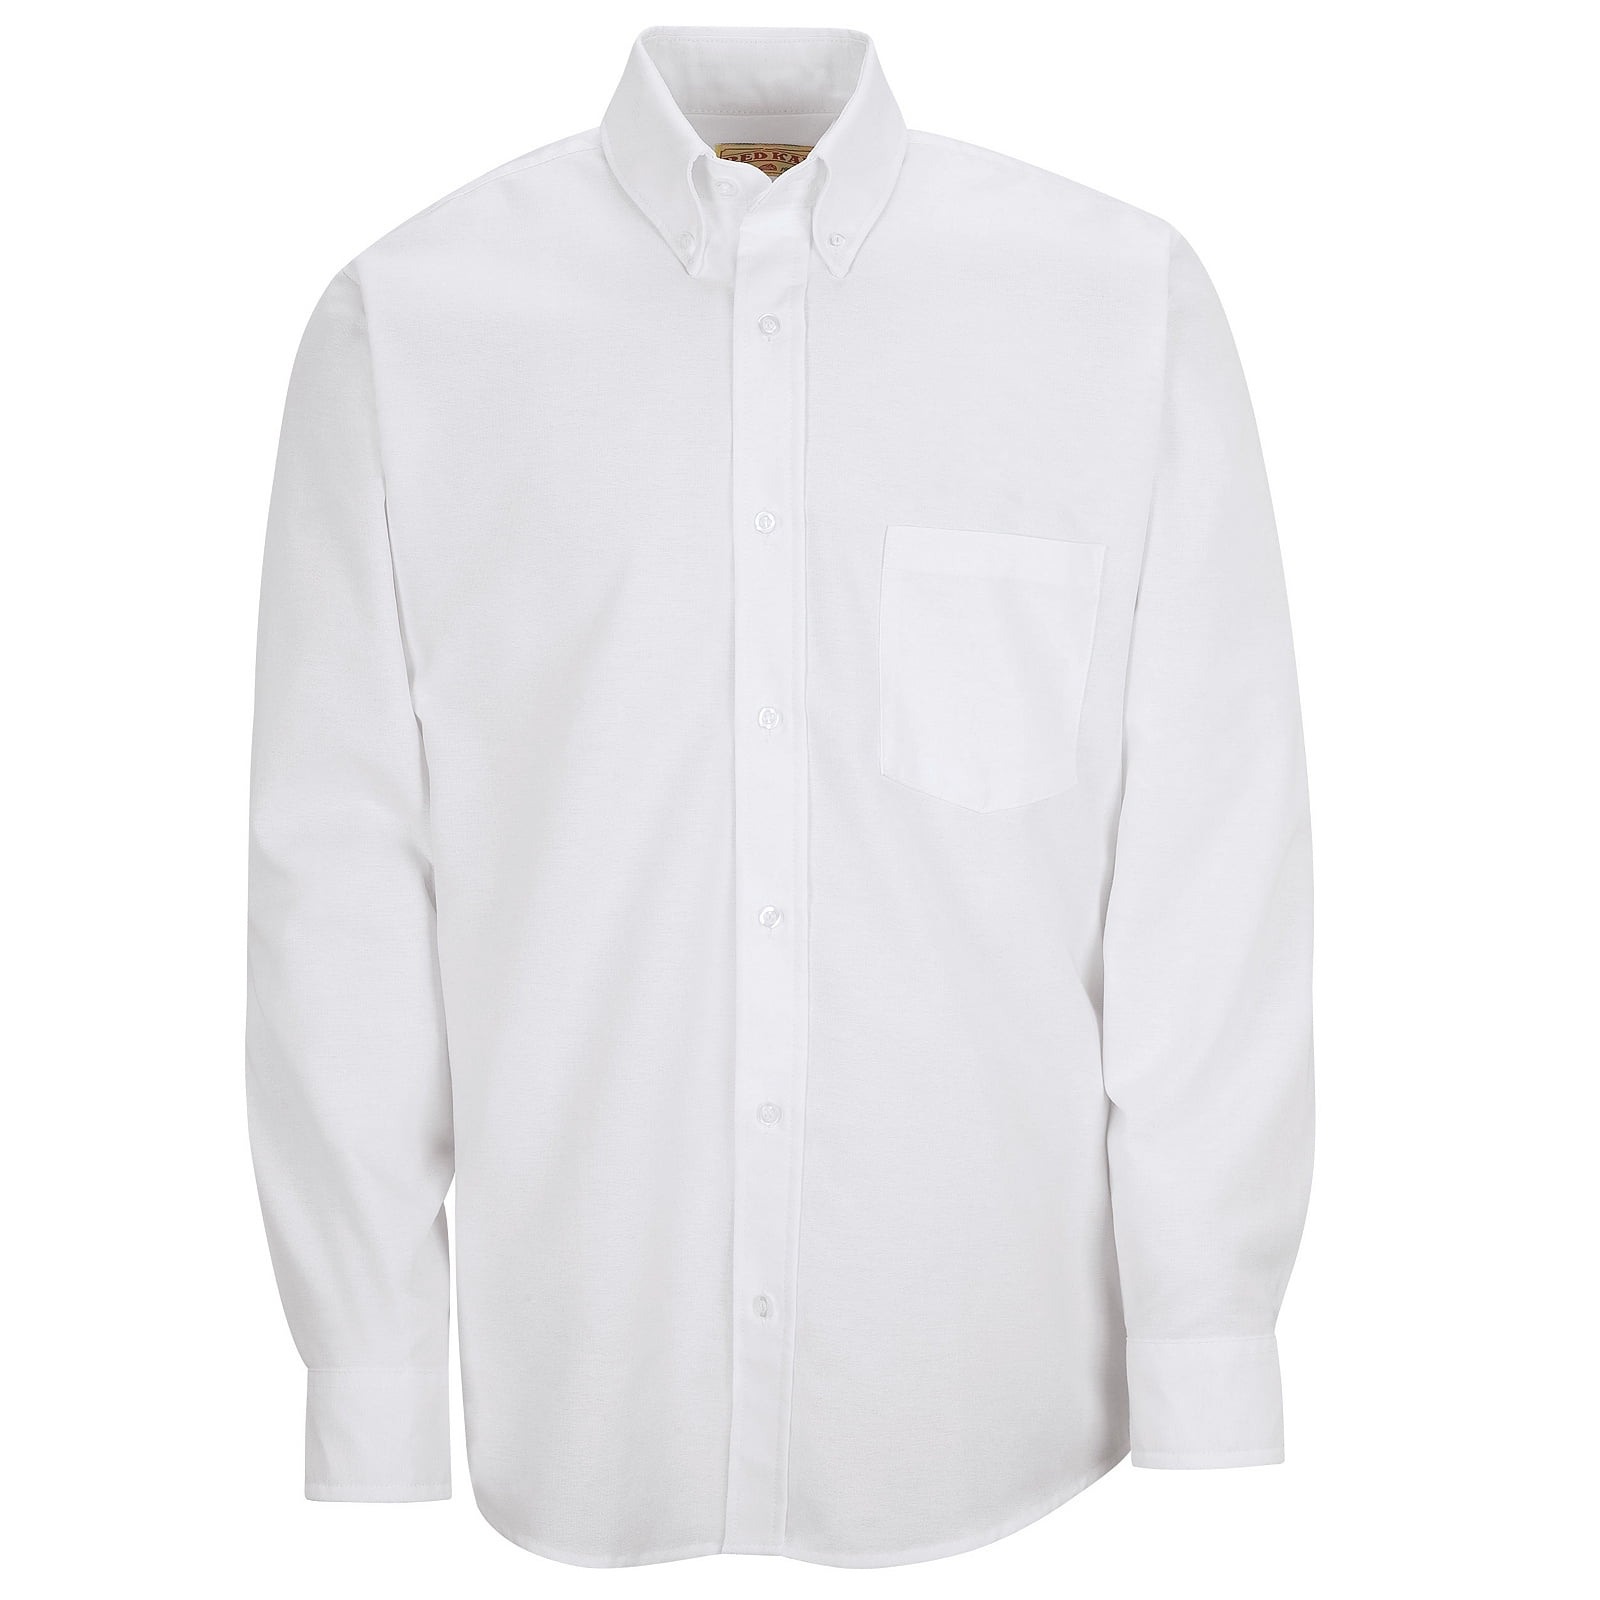 Van Heusen Non-Iron Pinpoint Oxford Shirt in White XL | 13V0143 -  Walmart.com